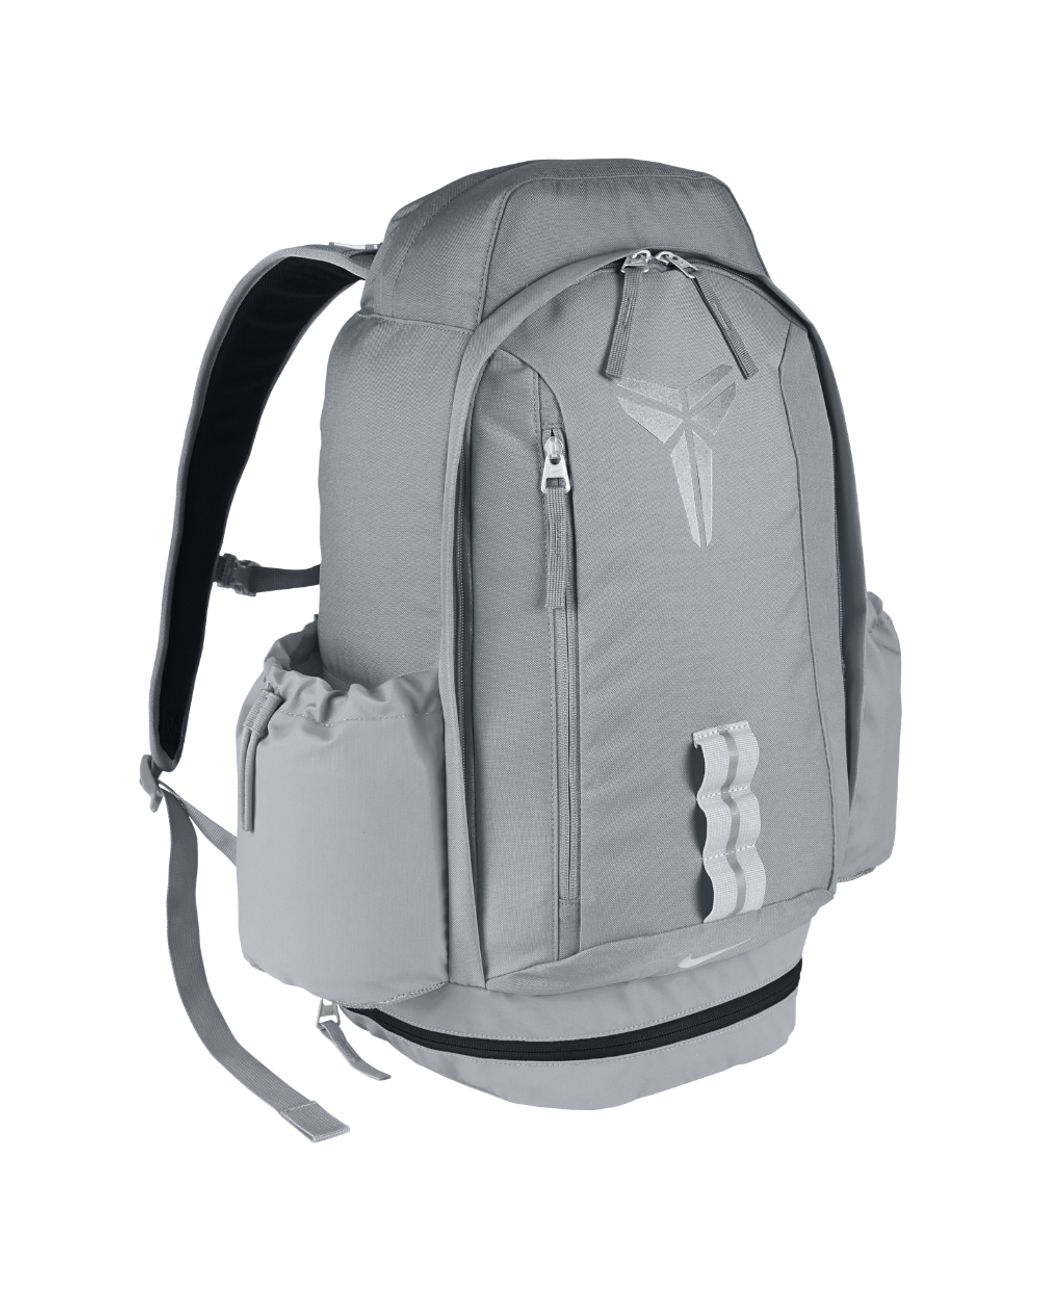 Nike Synthetic Kobe Mamba Xi Basketball Backpack (grey) in Cool  Grey/Black/Metallic Silver (Metallic) | Lyst